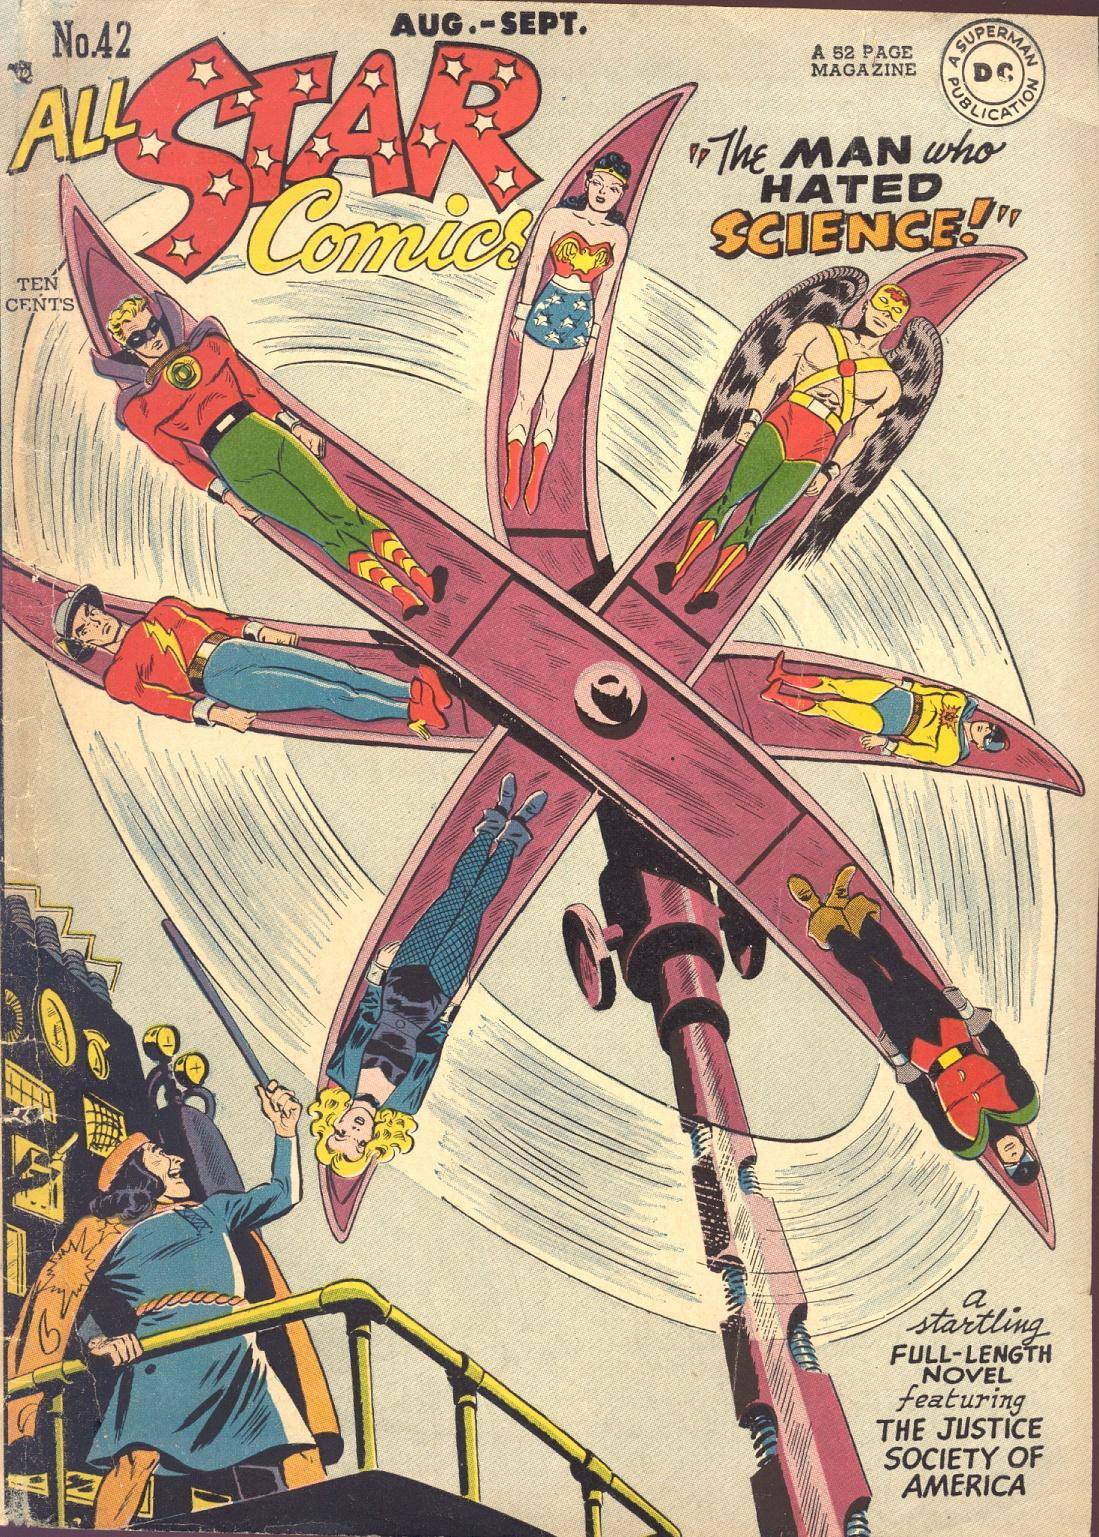 FORAL - ALL-STAR COMICS [42 of 74] All Star Comics 042 cbz